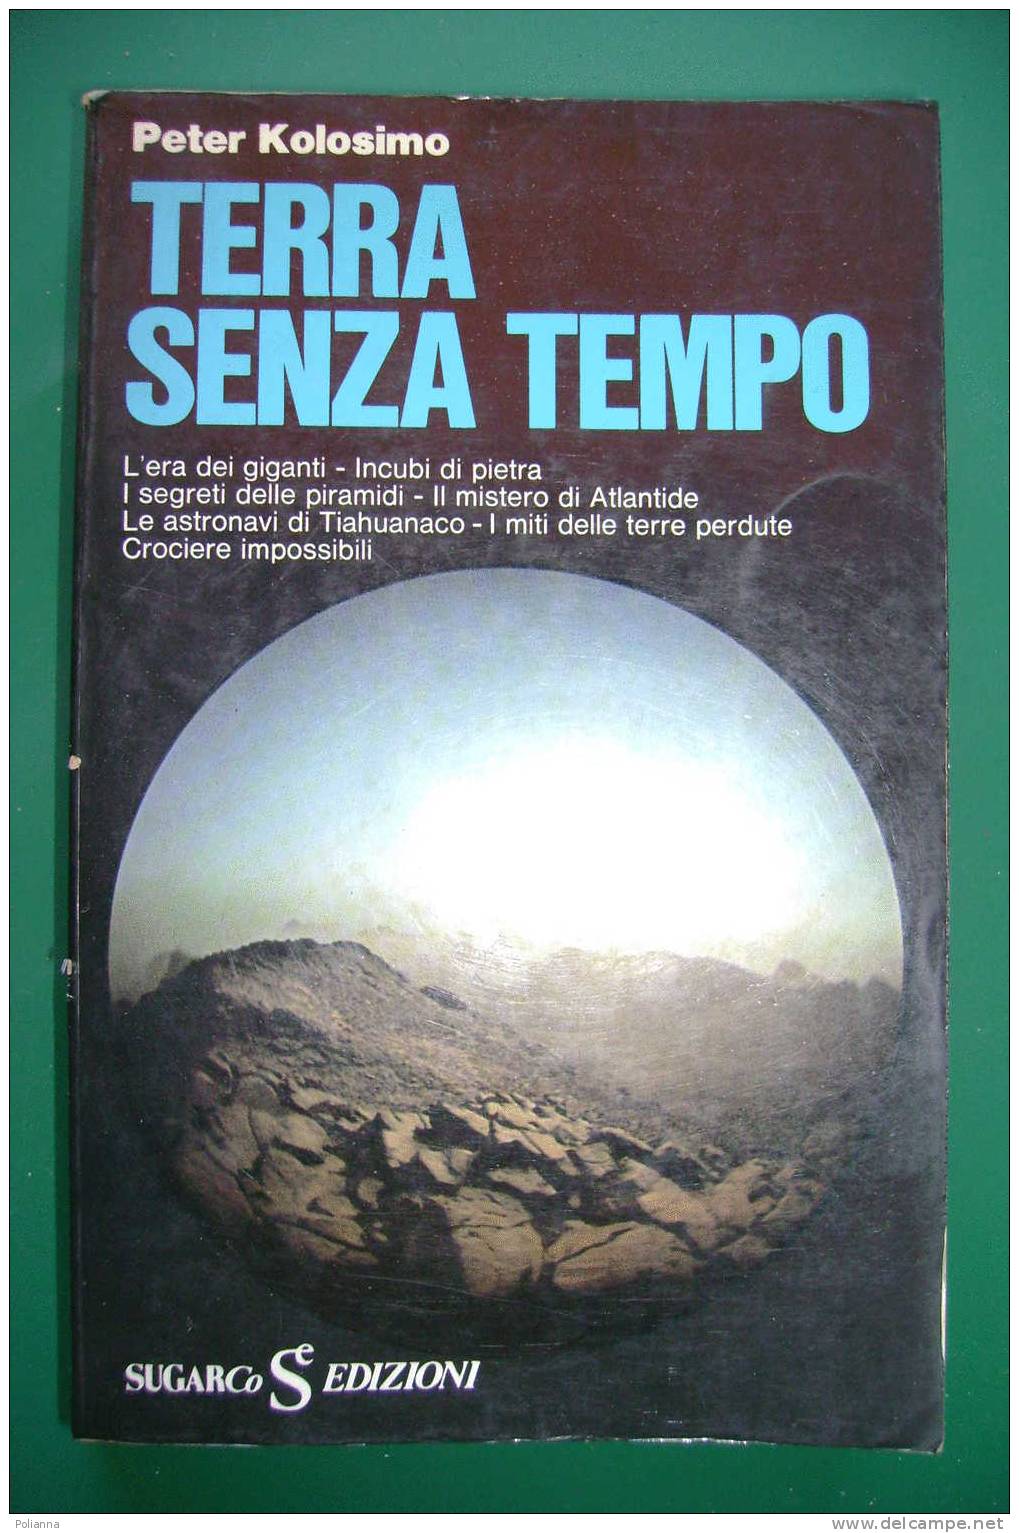 PDG/34  Peter Kolosimo TERRA SENZA TEMPO Sugar Edizioni 1975 - Science Fiction Et Fantaisie